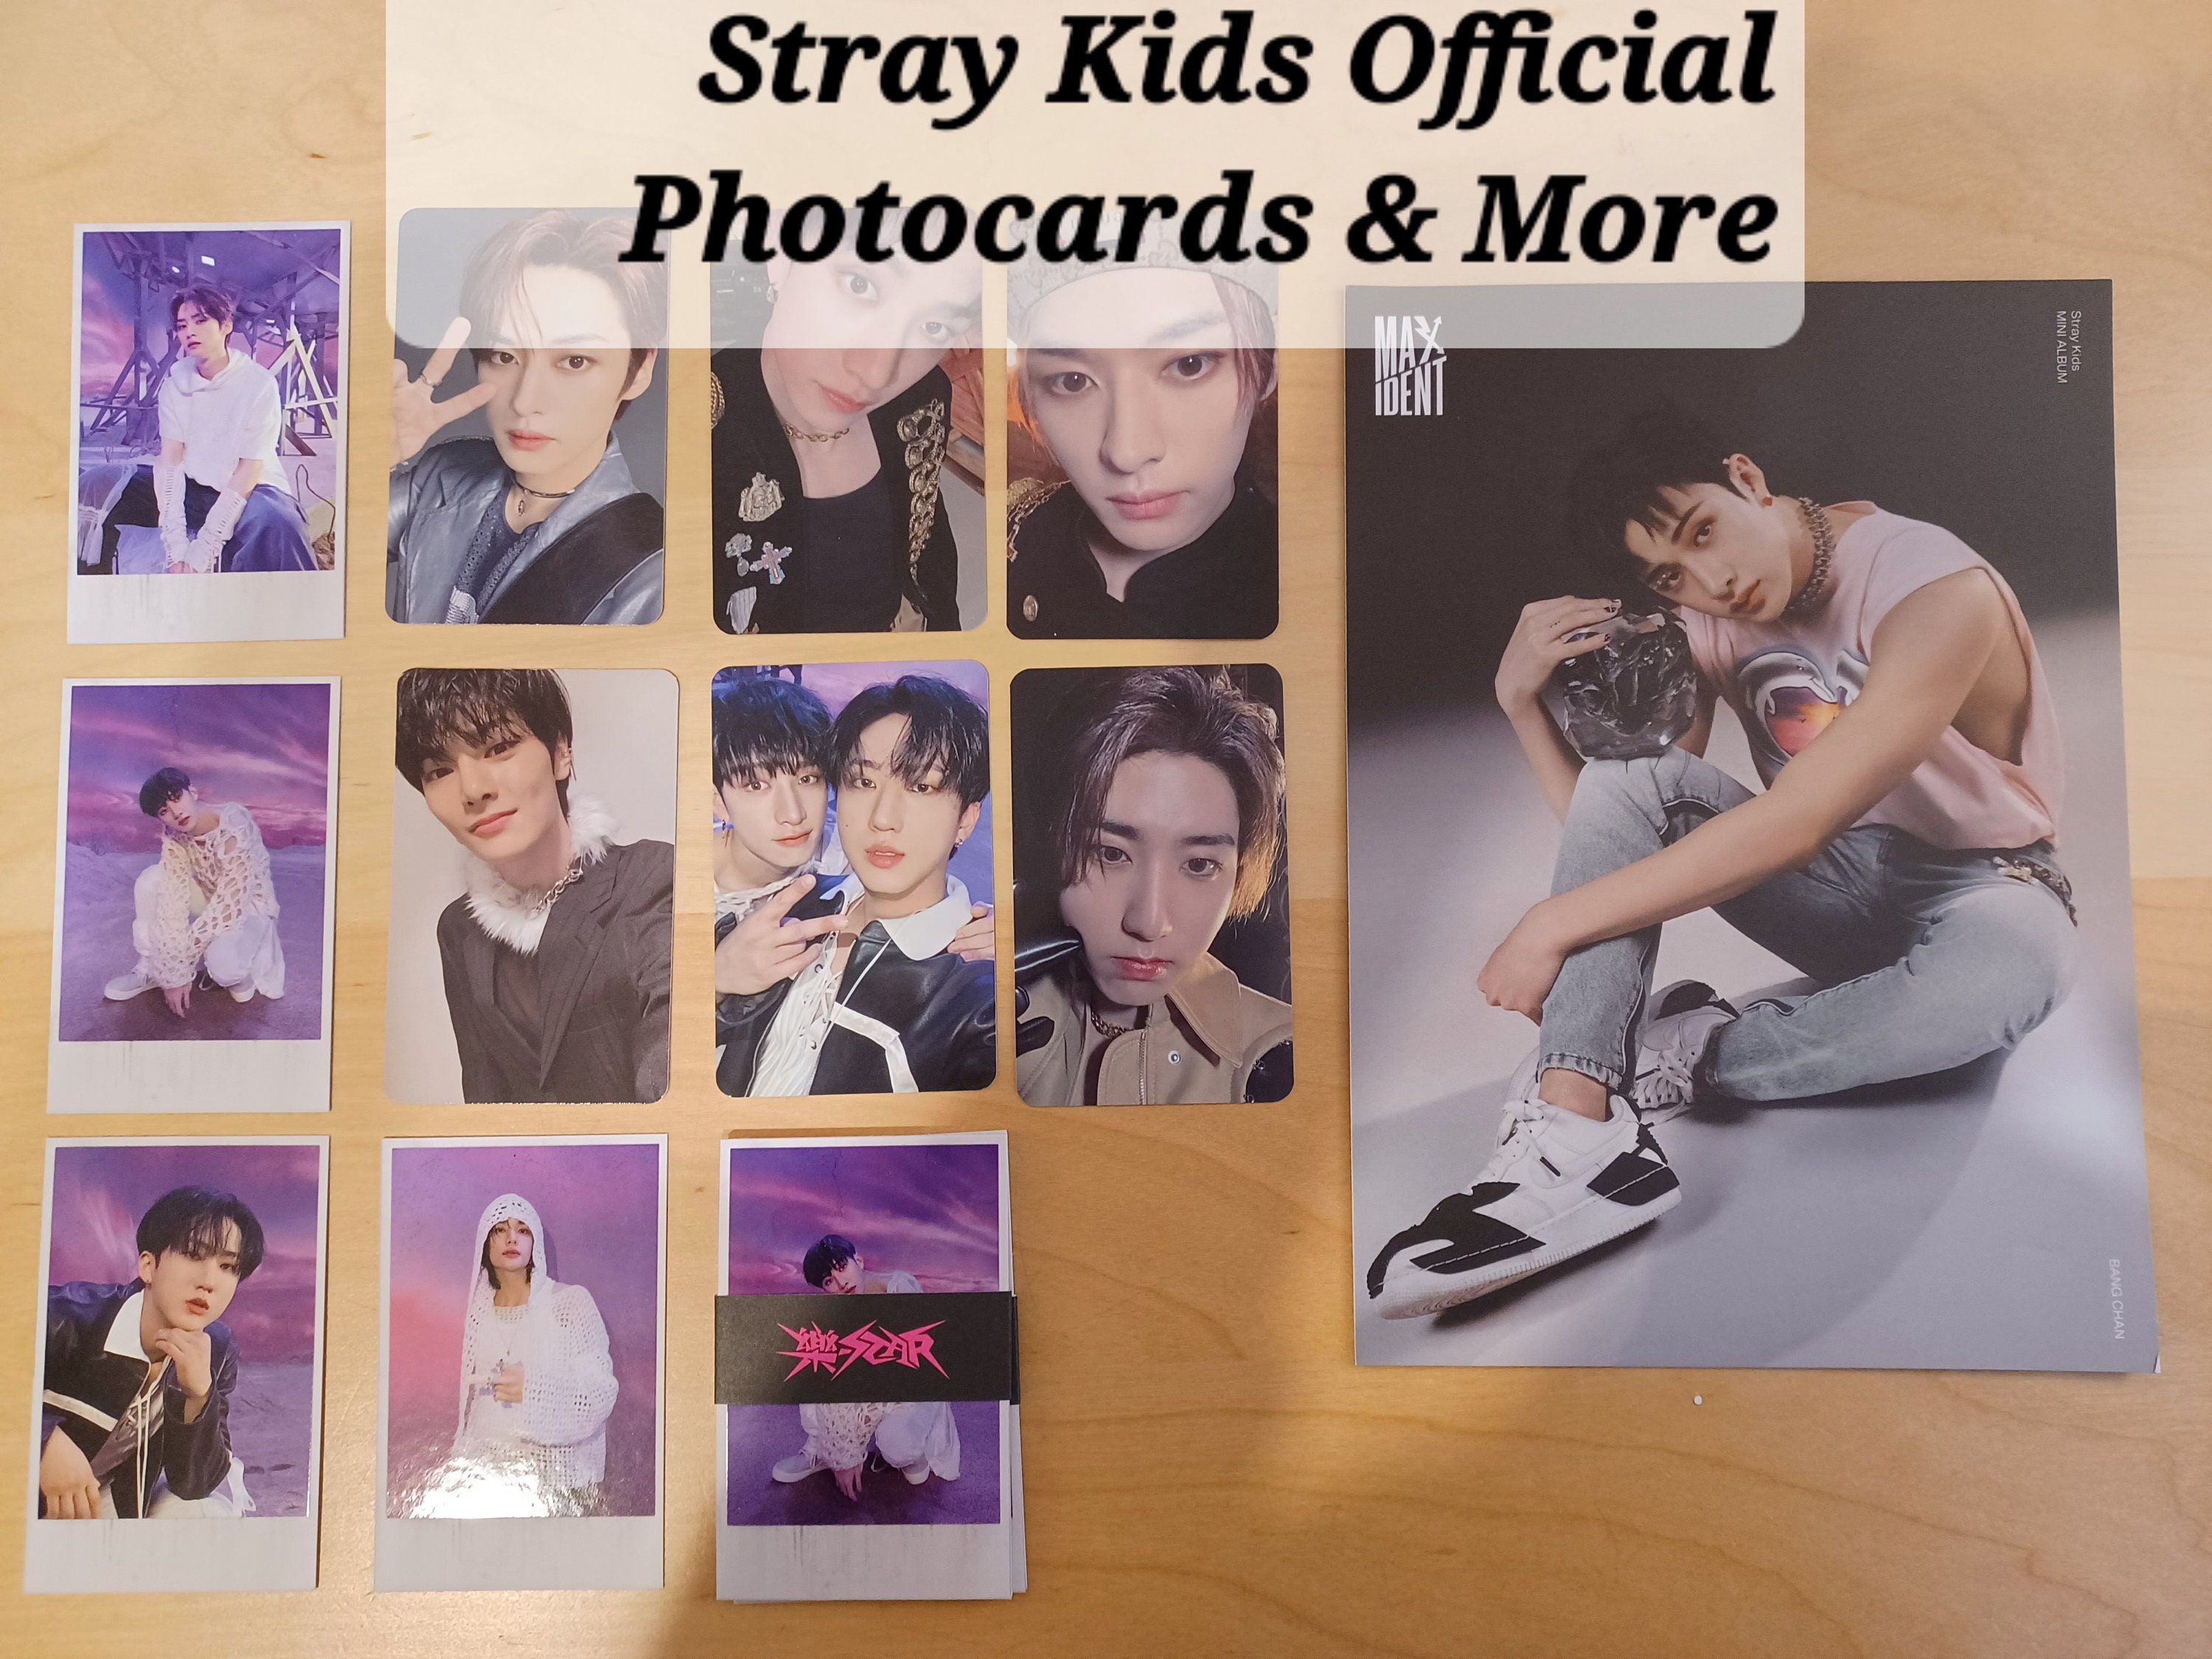 Stray Kids 5 Star Album Photo cards ( Set of 12 + 4 Freebies